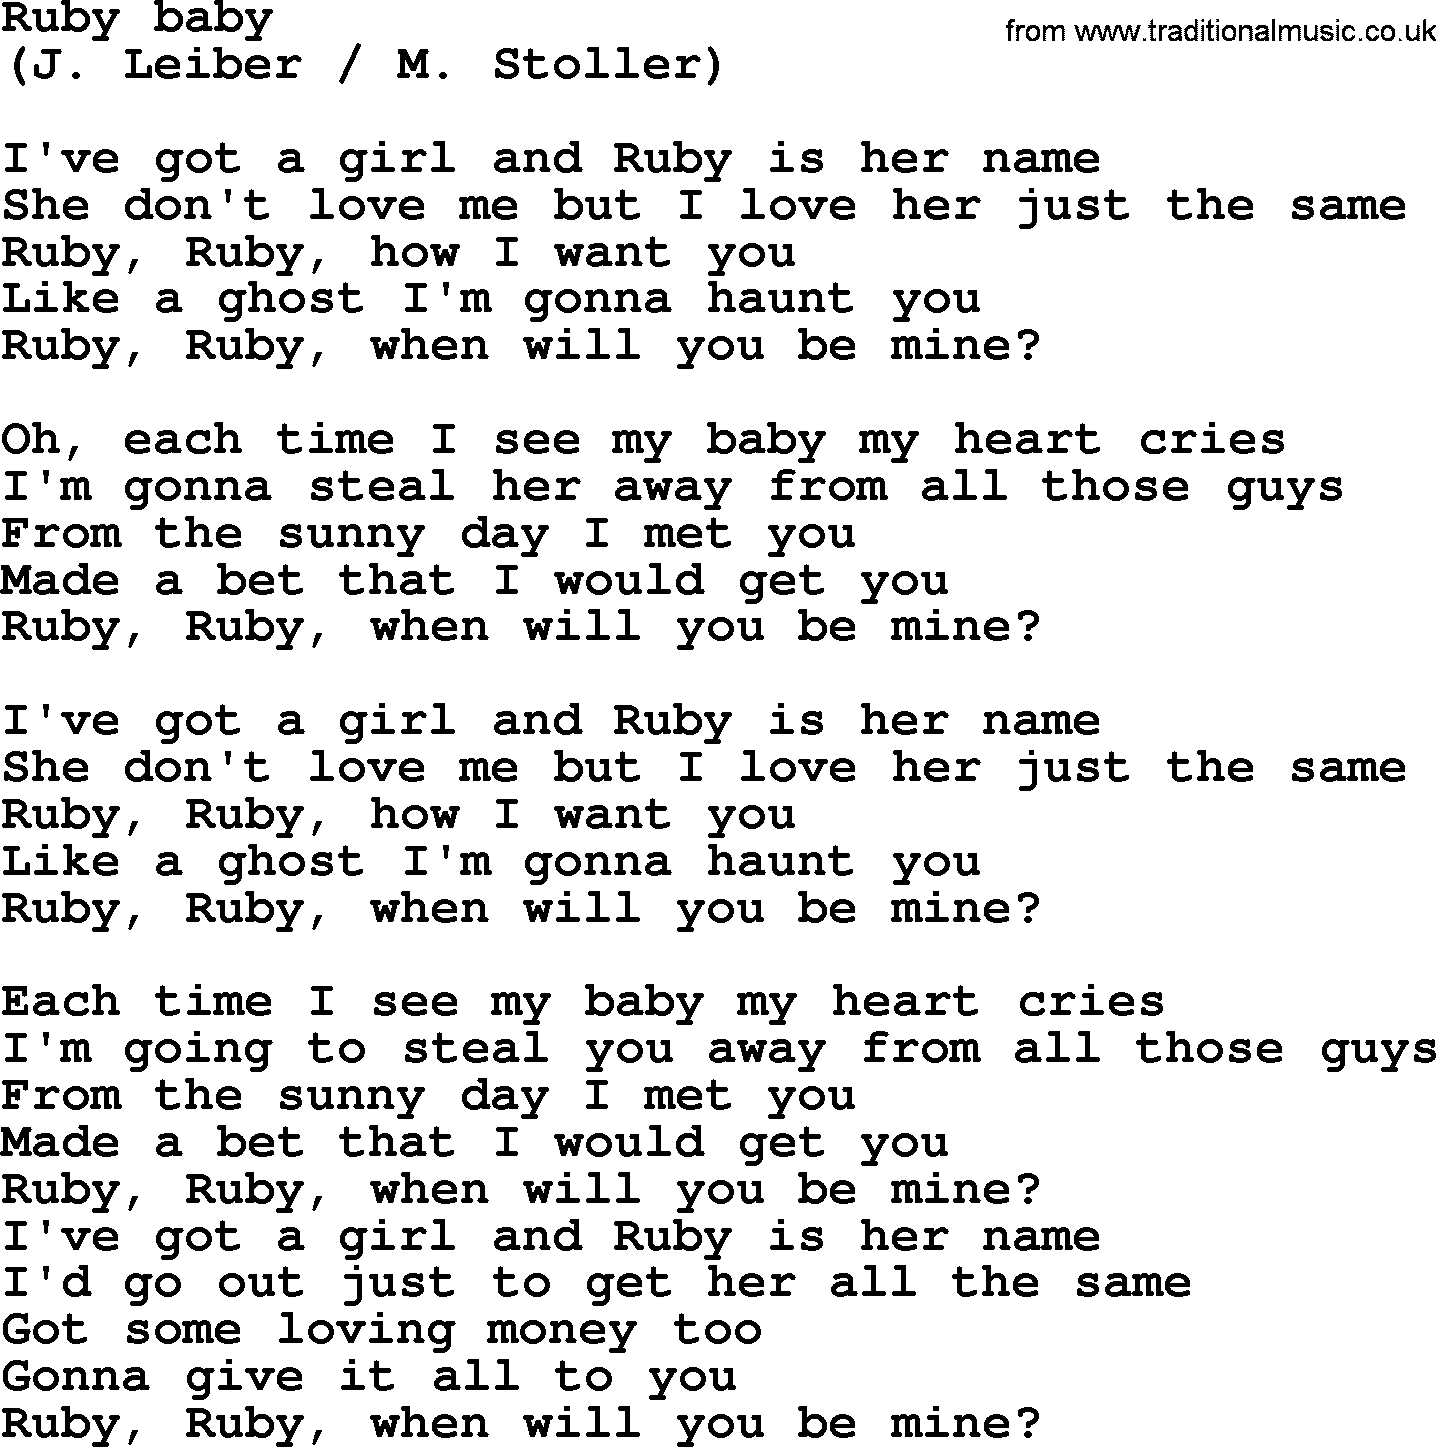 Bruce Springsteen song: Ruby Baby lyrics